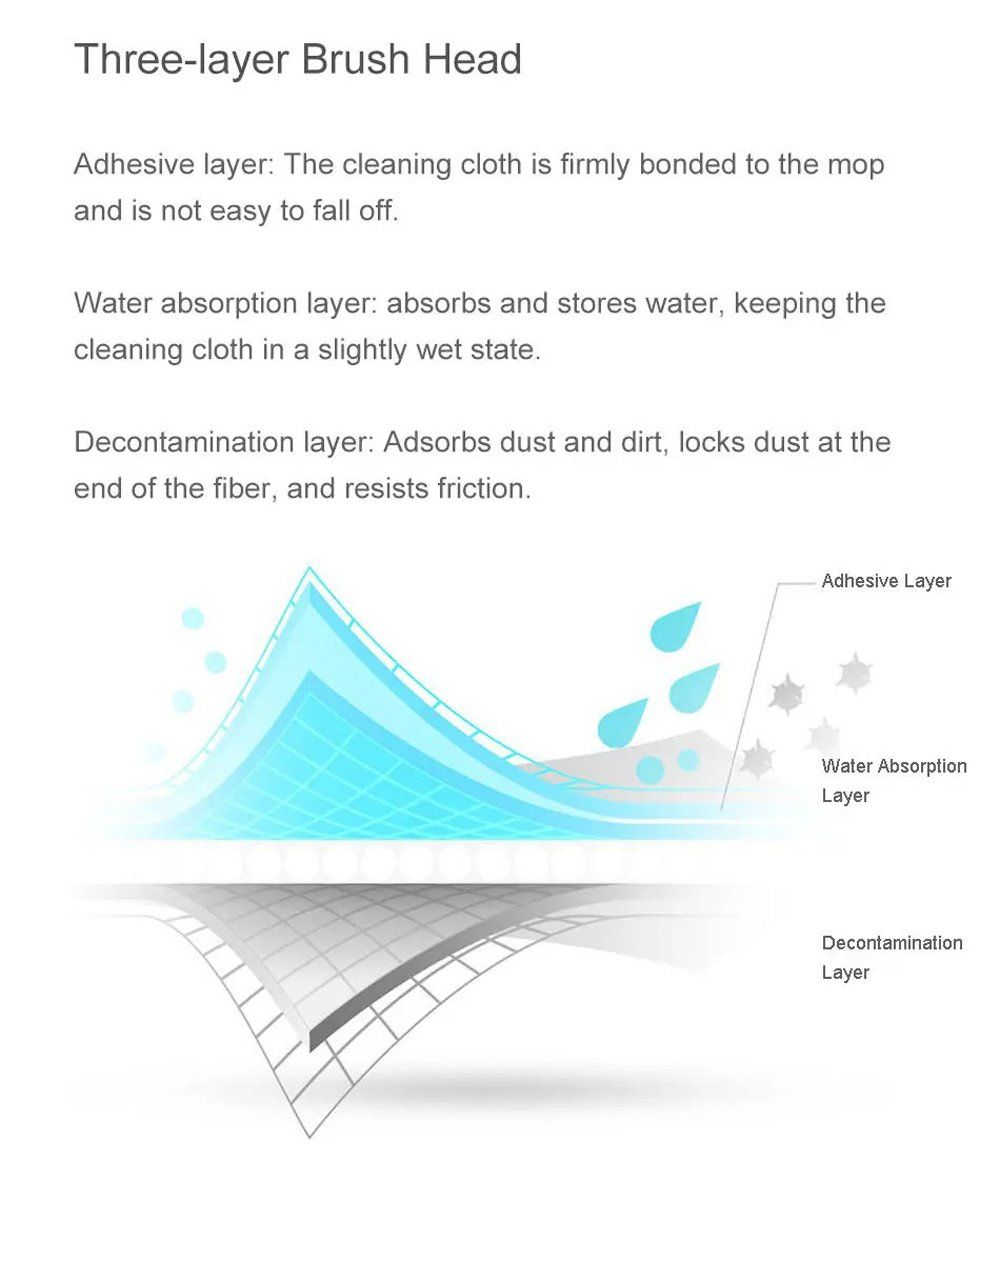 Xiaomi Deerma TB500 Water Spray Mop Carbon Fiber Dust Collector 360° Rotating 350ml Tank Waxing Mop Default Deerma 